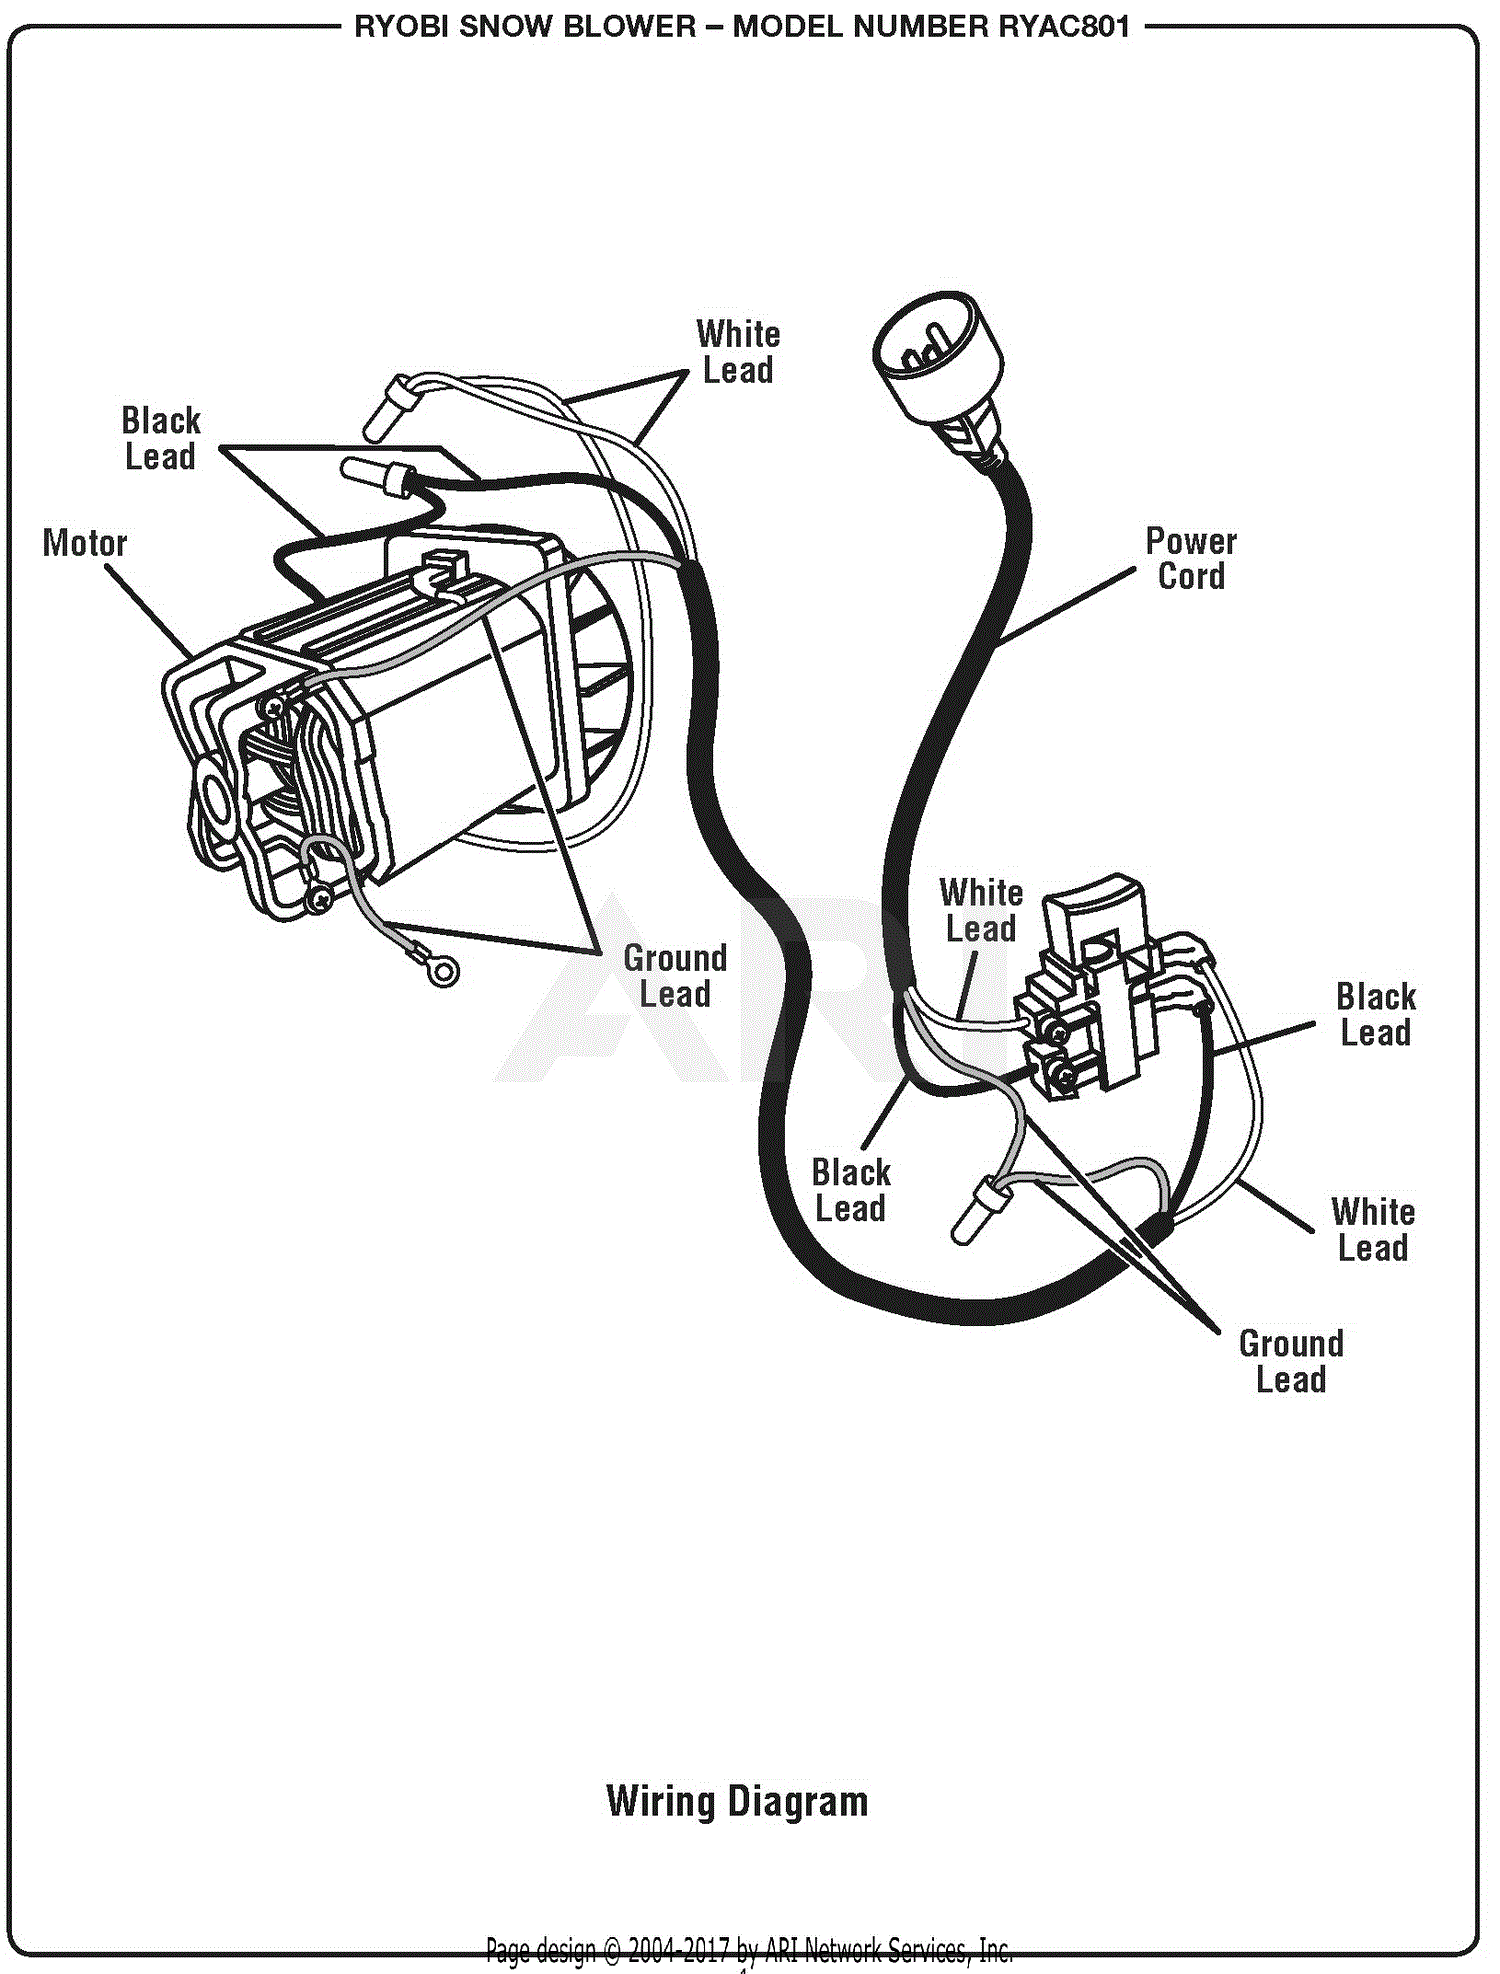 [DIAGRAM] Janitrol Blower Wiring Diagram - MYDIAGRAM.ONLINE